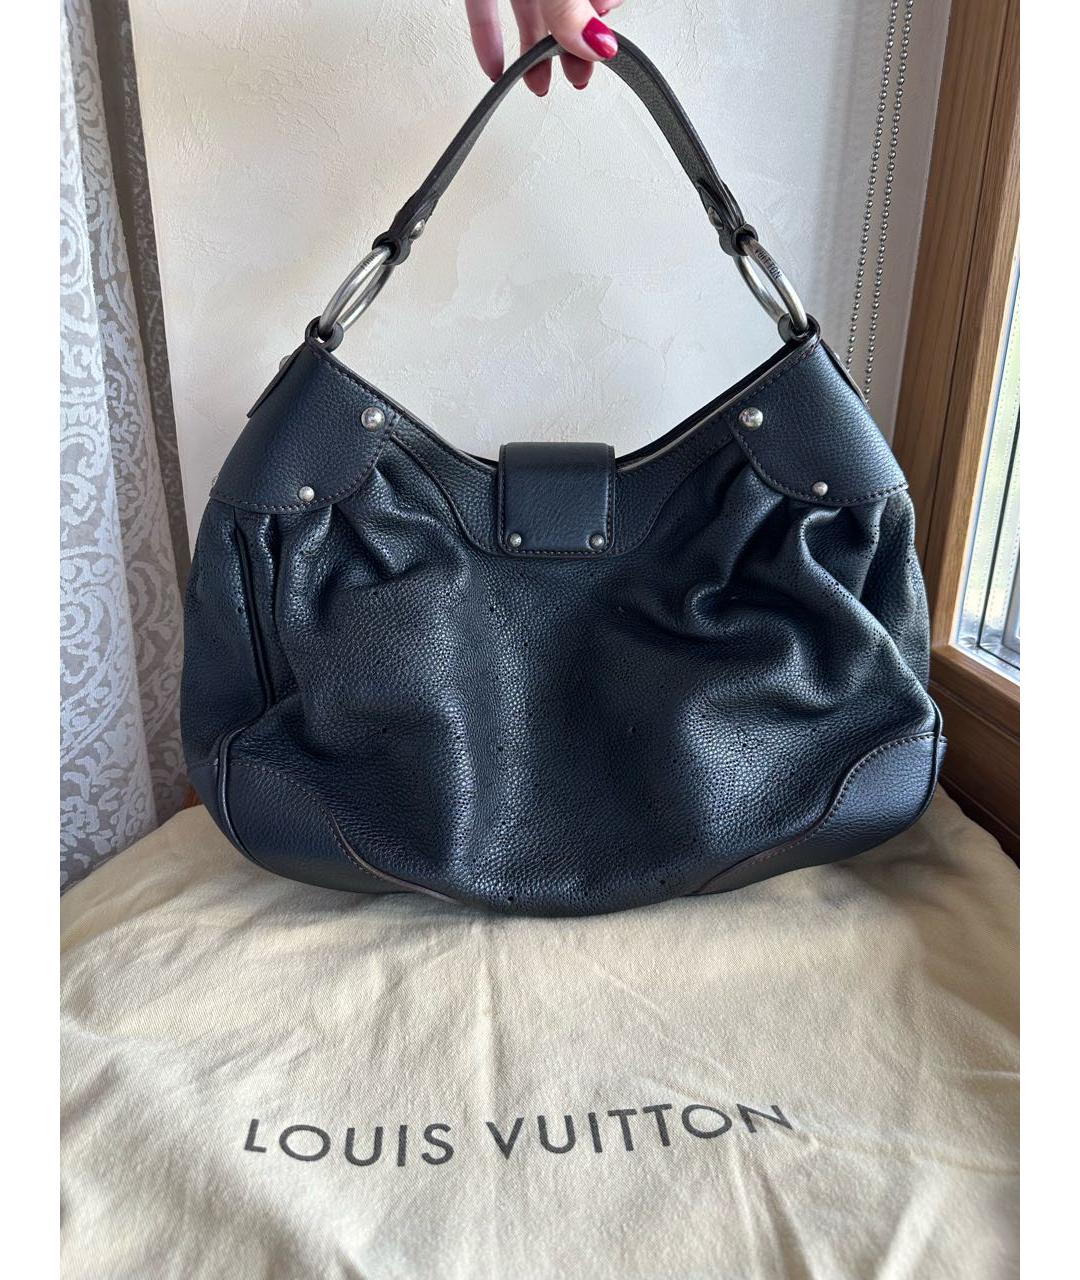 LOUIS VUITTON PRE-OWNED Черная кожаная сумка с короткими ручками, фото 2